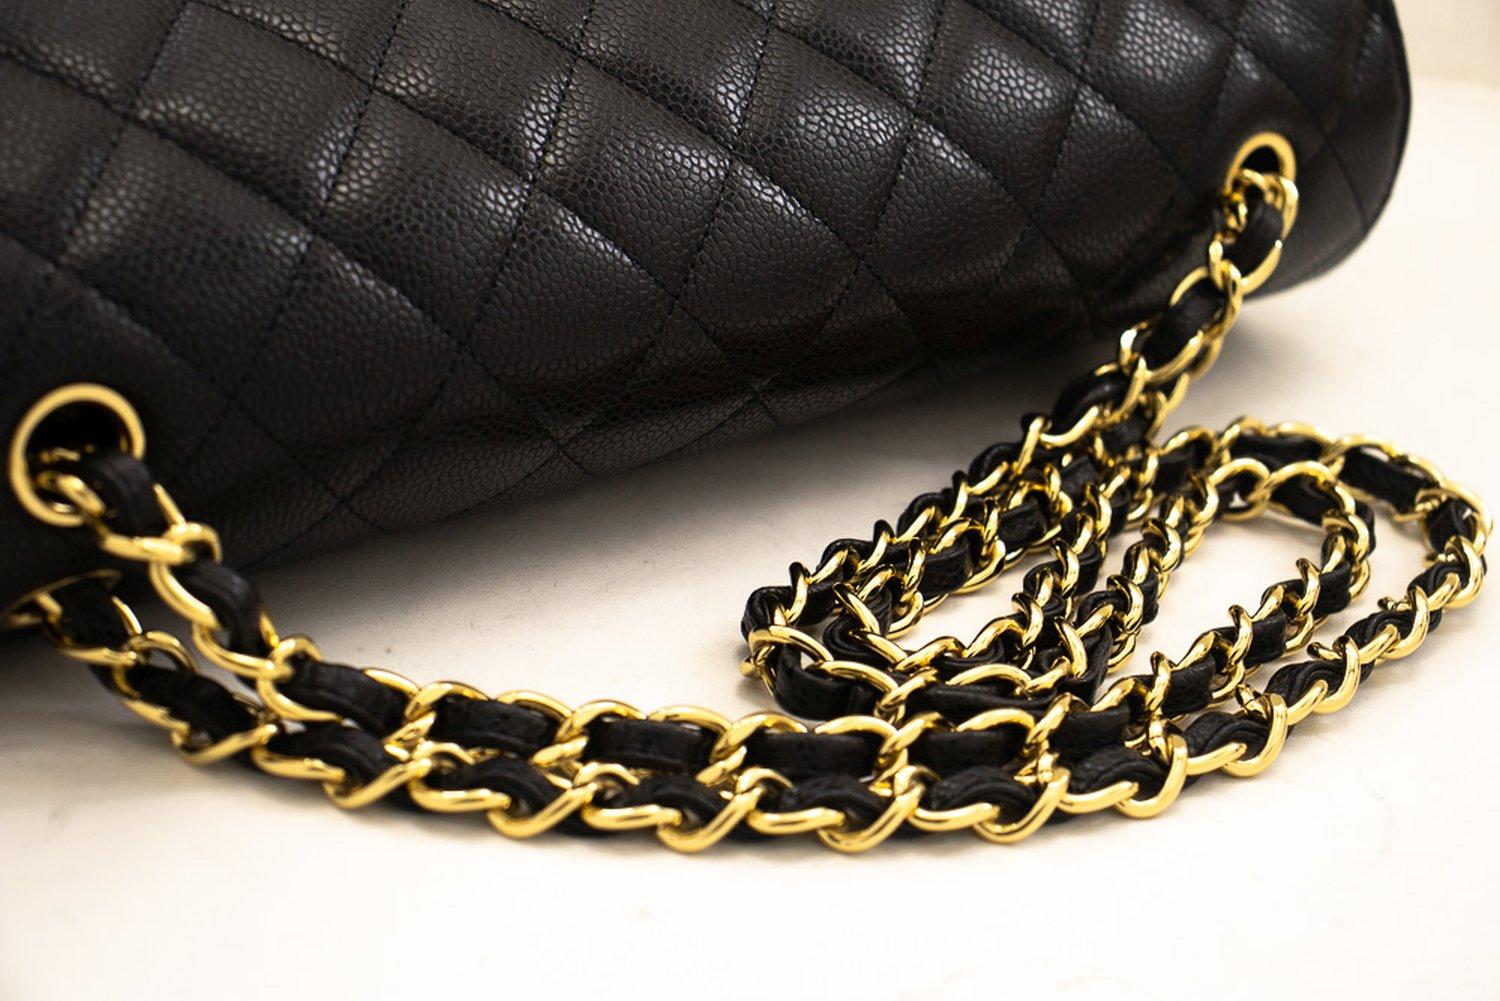 CHANEL Maxi Classic Handbag Grained Calfskin Double Chain Flap Shoulder Bag For Sale 9